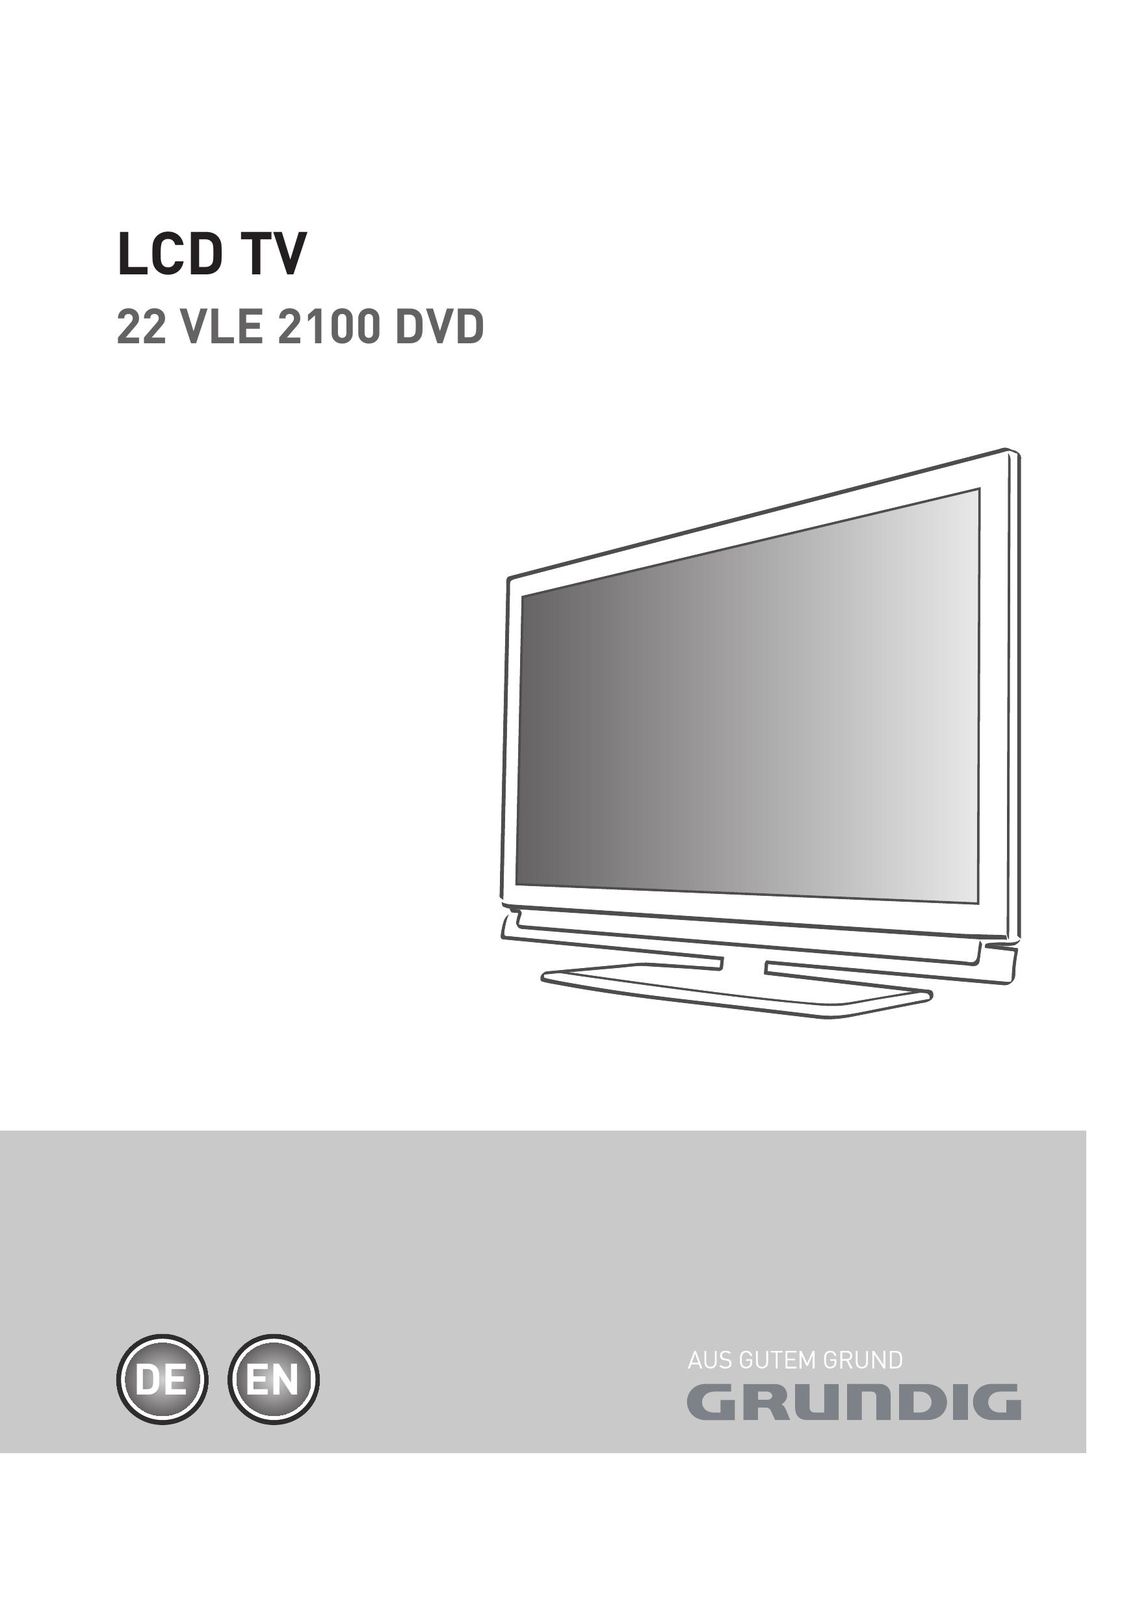 Grundig 22 VLE 2100 DVD Flat Panel Television User Manual